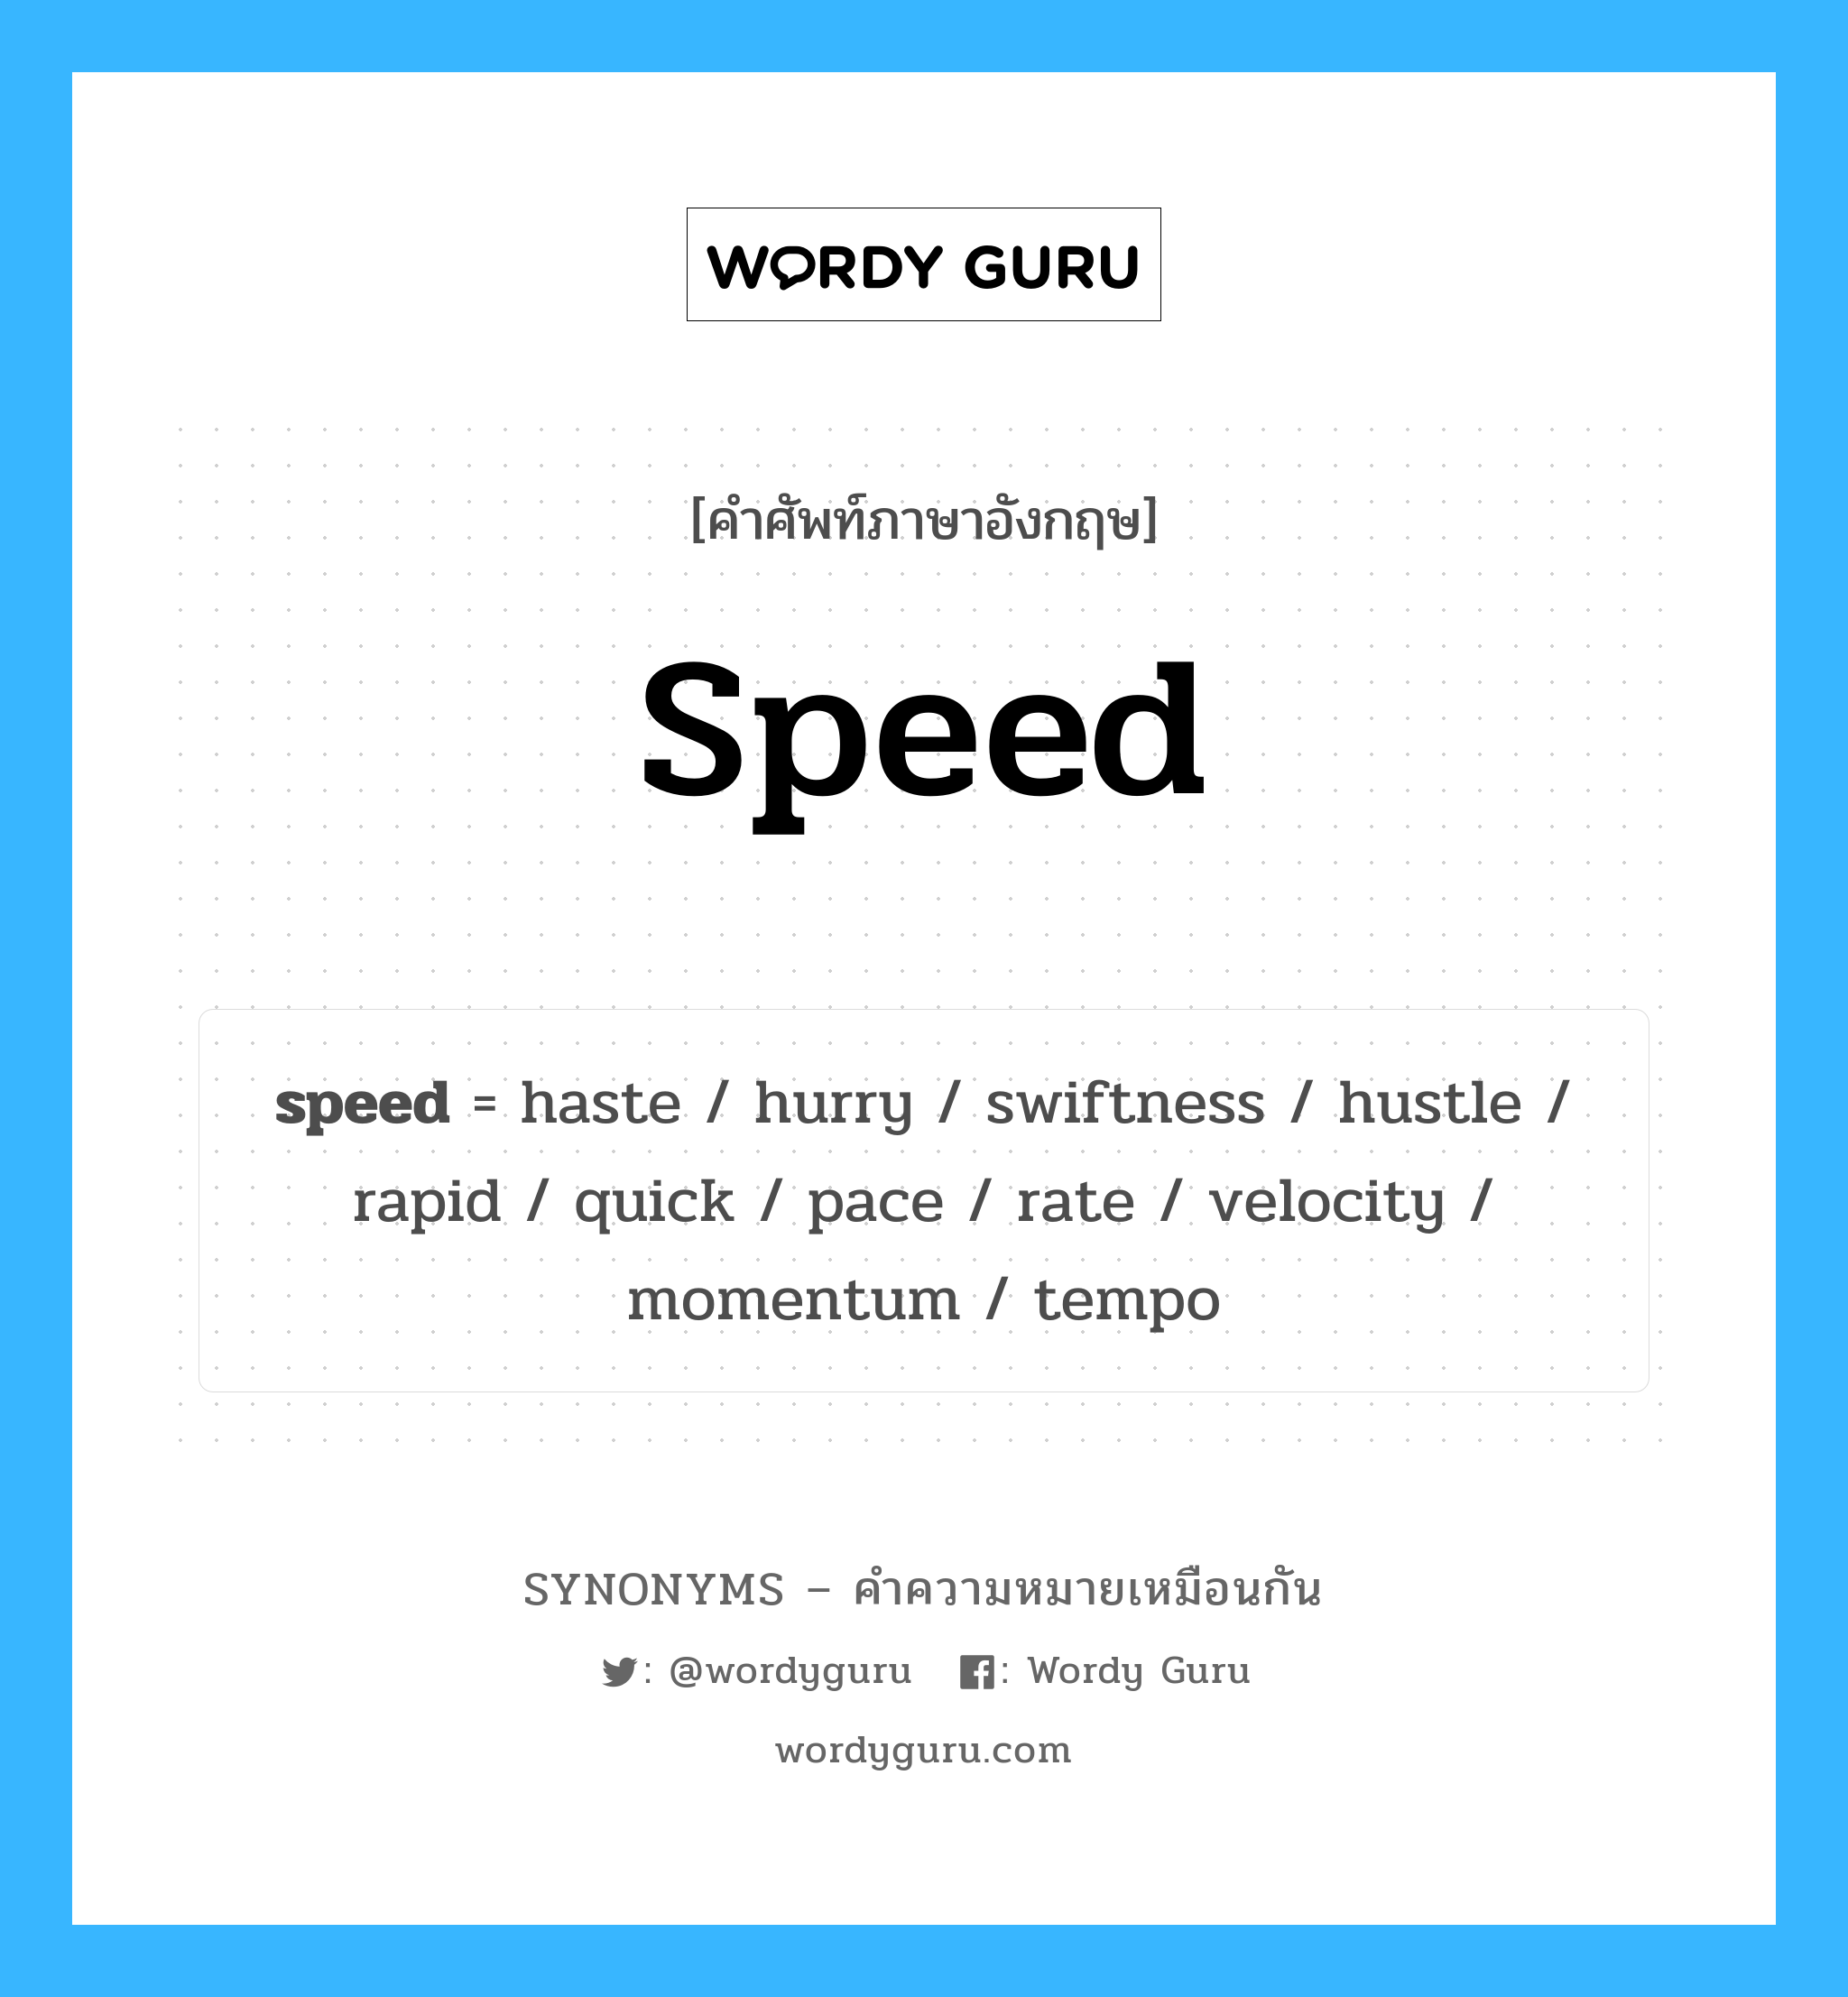 momentum เป็นหนึ่งใน speed และมีคำอื่น ๆ อีกดังนี้, คำศัพท์ภาษาอังกฤษ momentum ความหมายคล้ายกันกับ speed แปลว่า โมเมนตัม หมวด speed